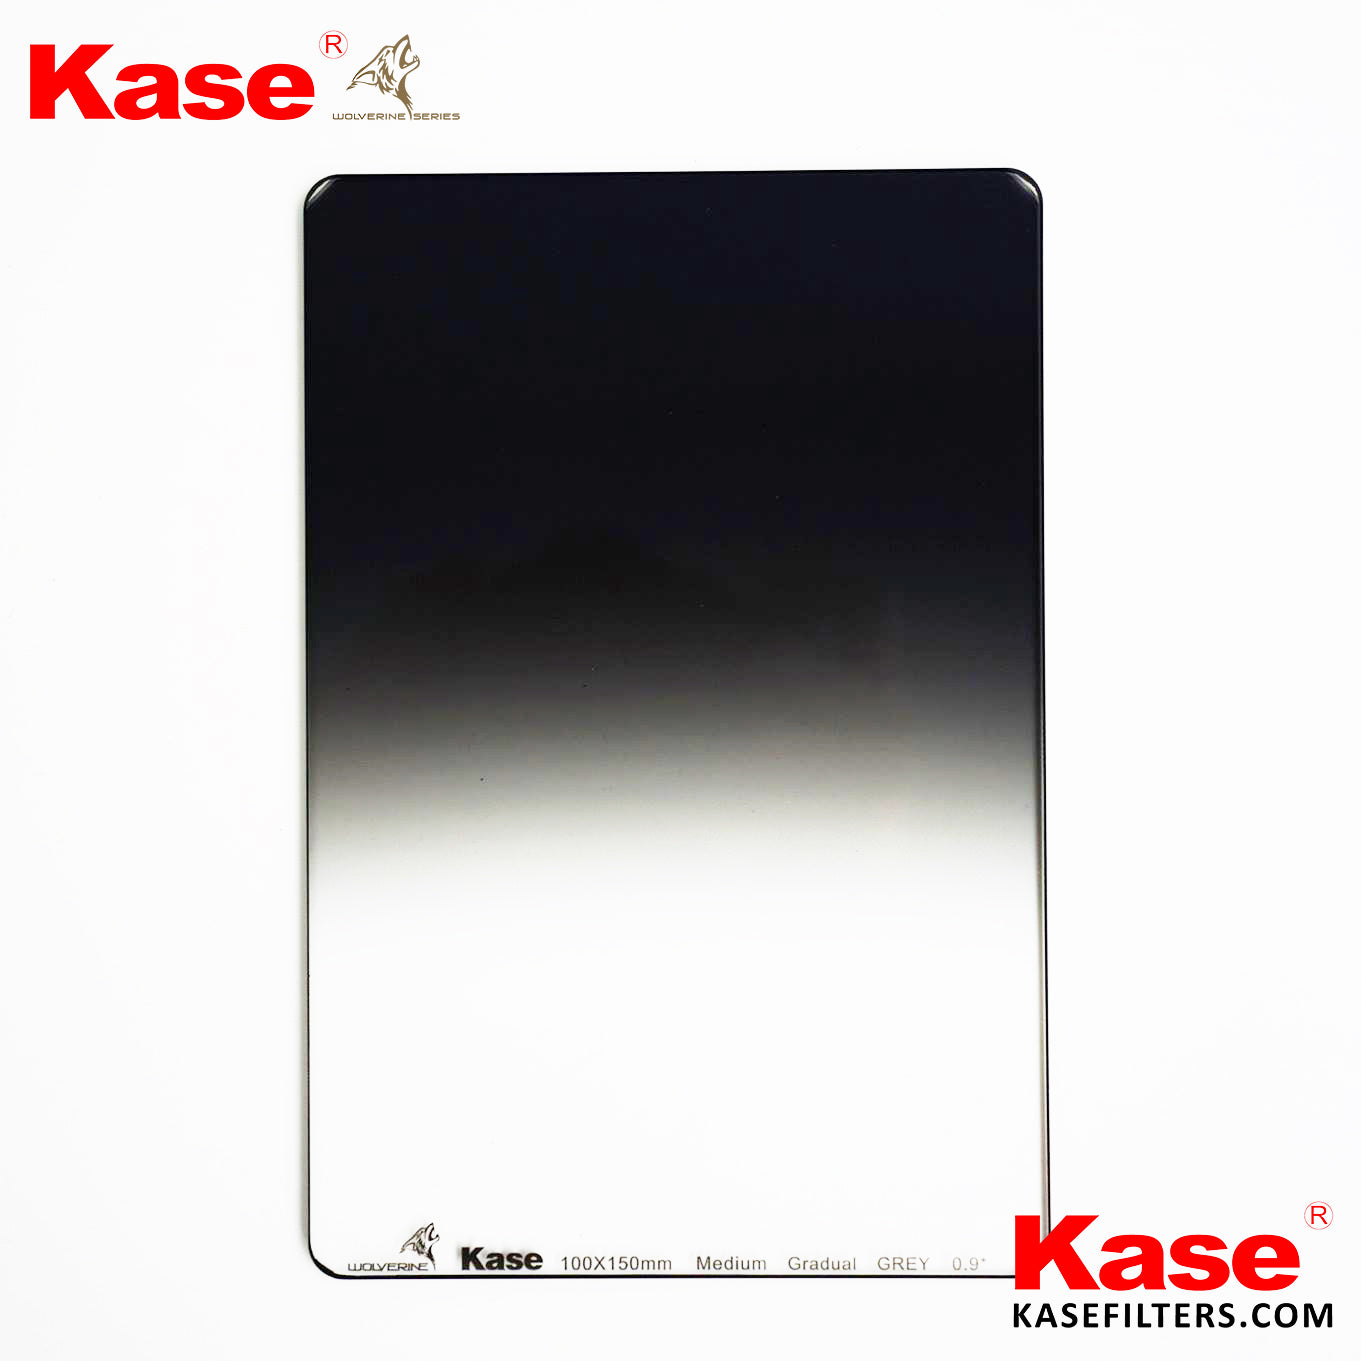 Product Image of KASE WOLVERINE 100MM MEDIUM GRAD GND 0.9 FILTER (3 STOPS)